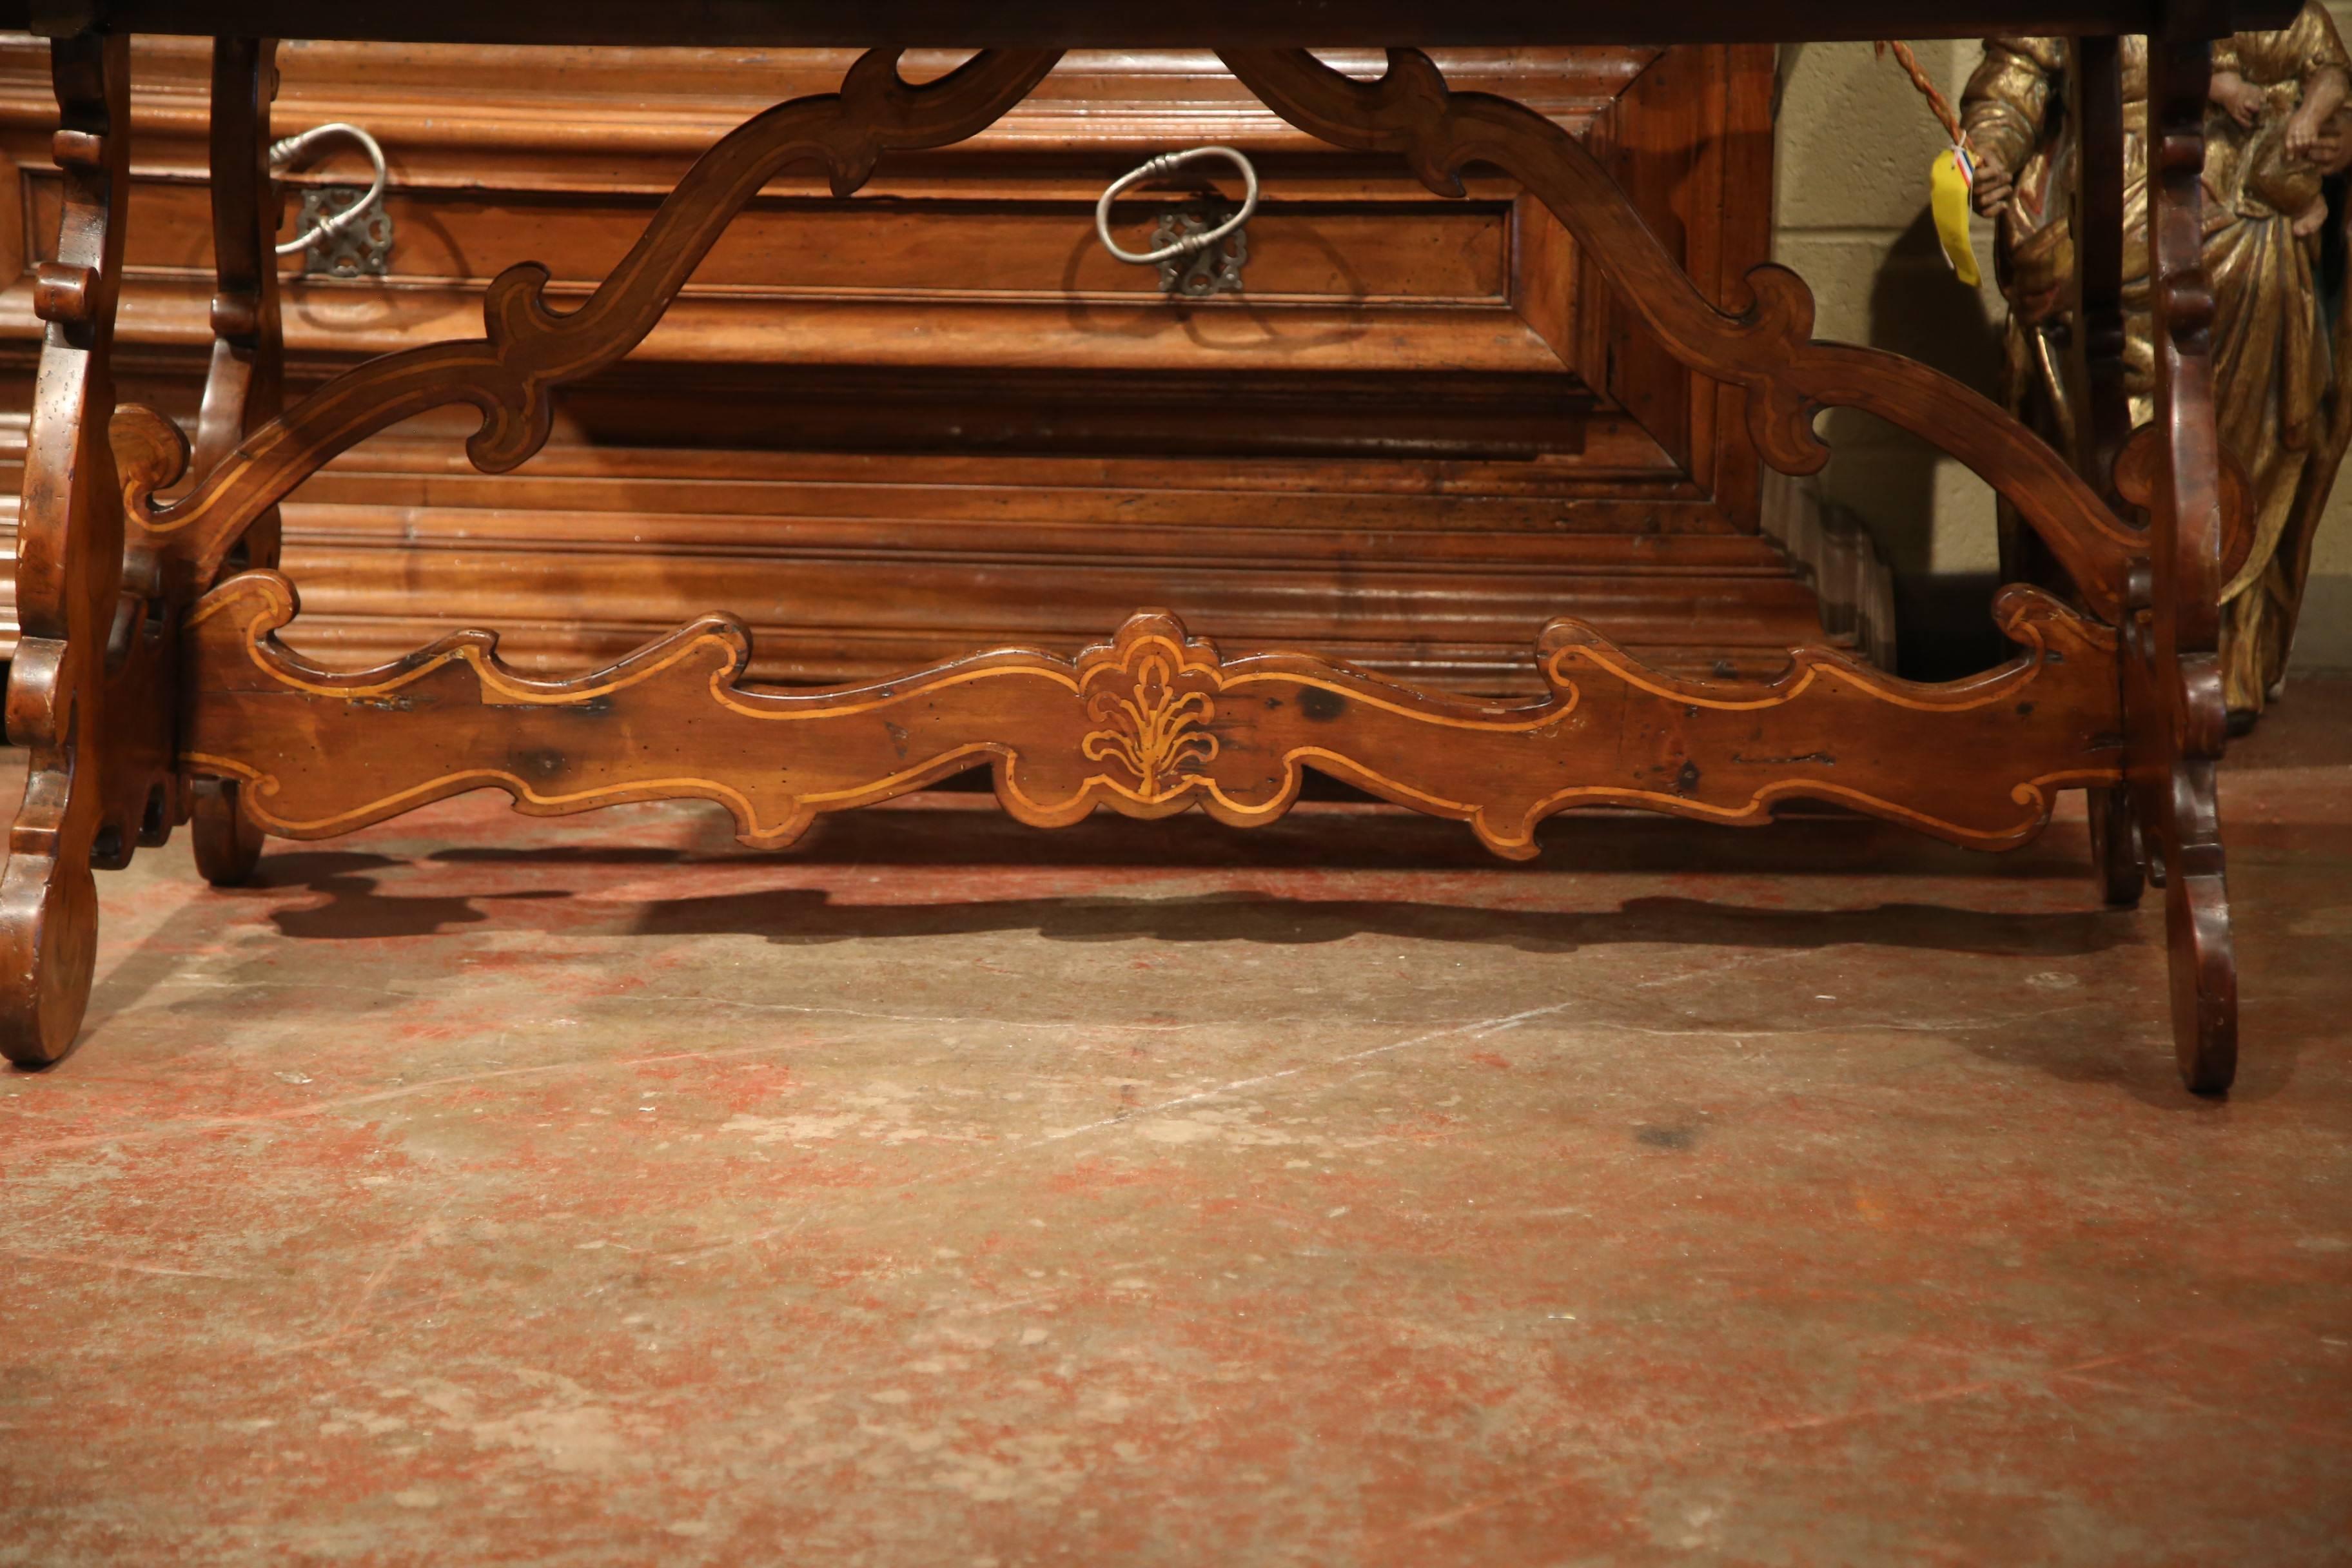 Cherry 19th Century Italian Carved Walnut Trestle Table with Decorative Inlay Motifs